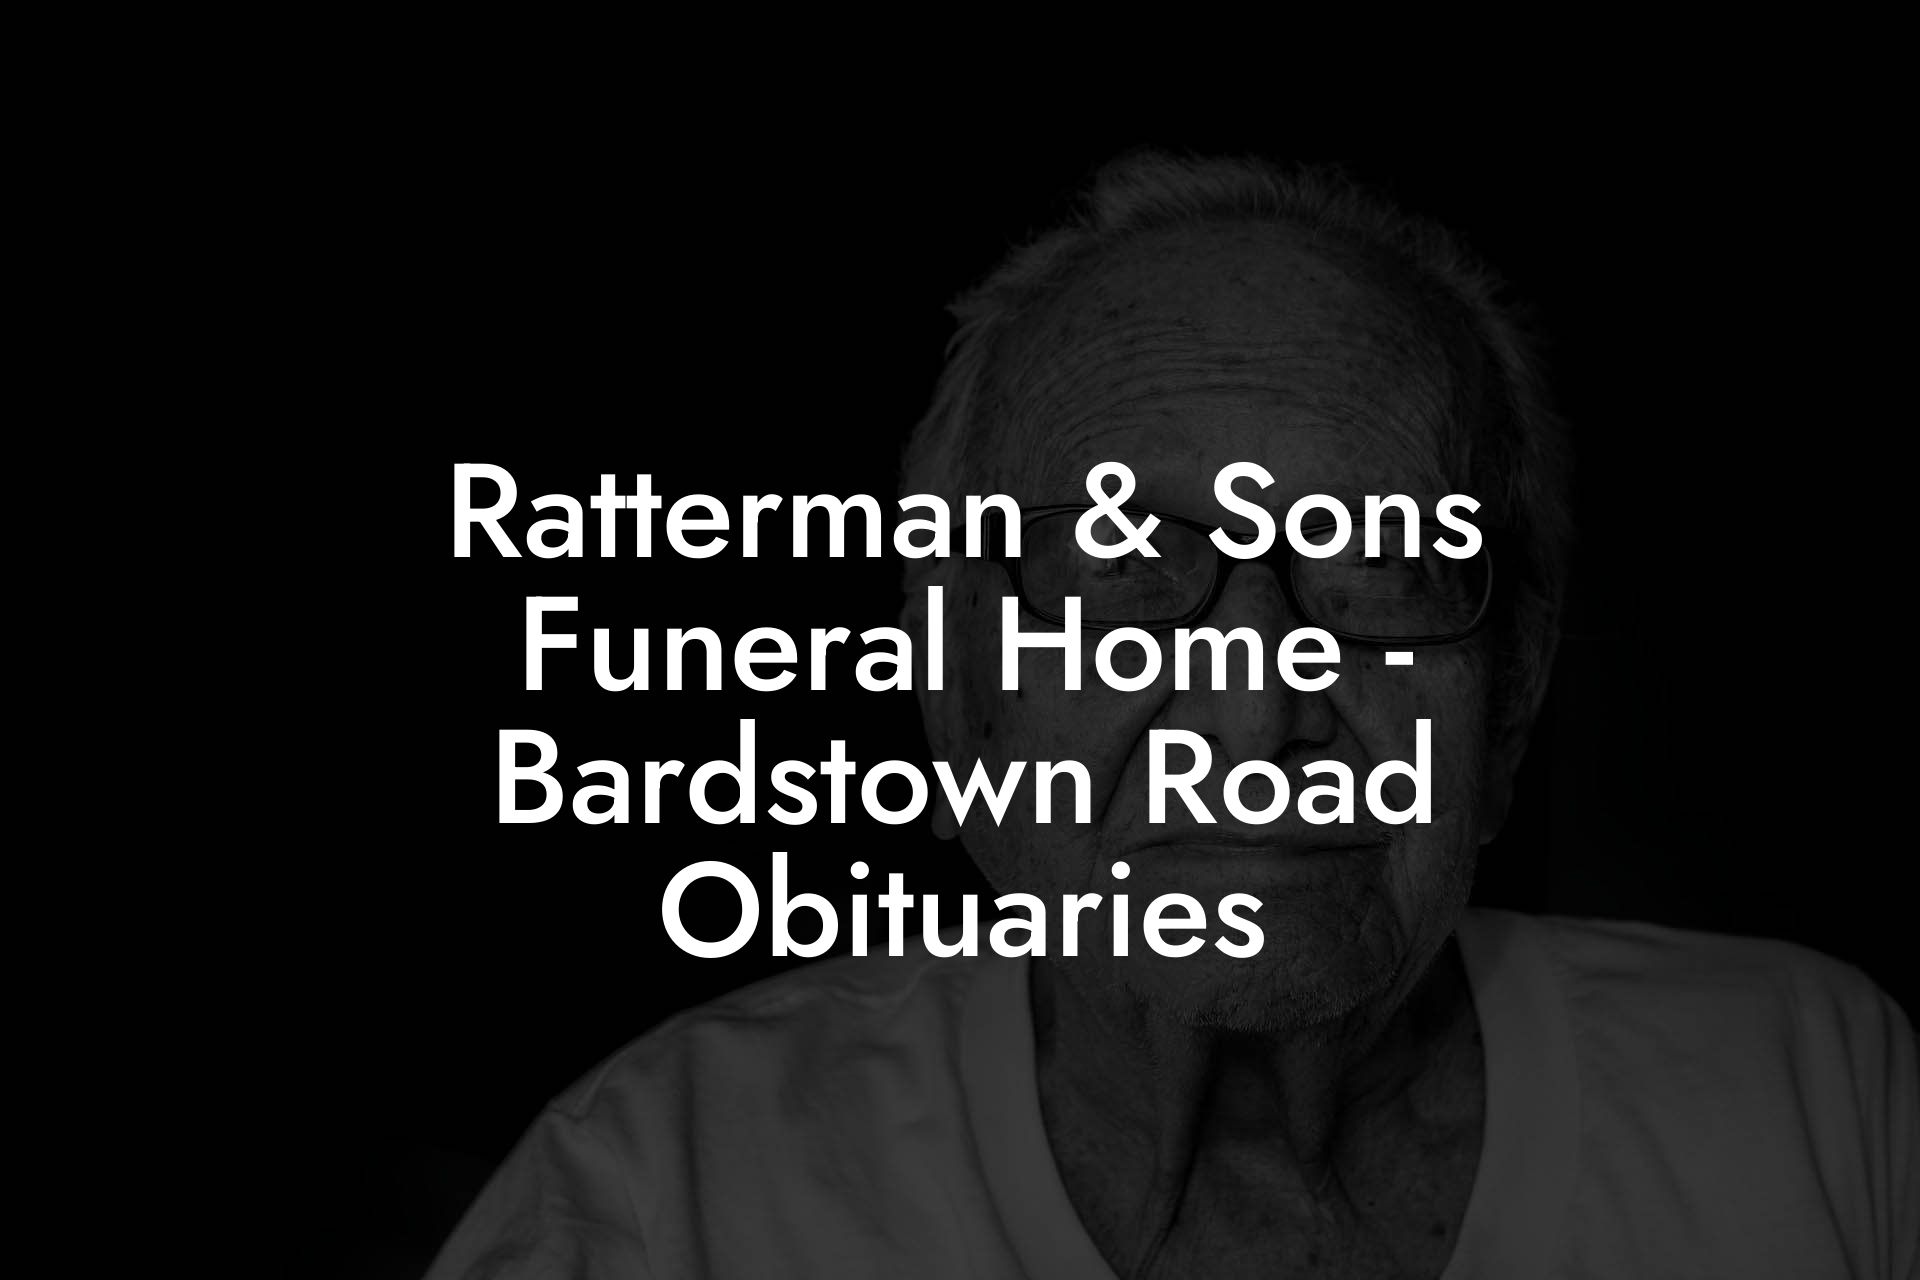 Ratterman & Sons Funeral Home - Bardstown Road Obituaries